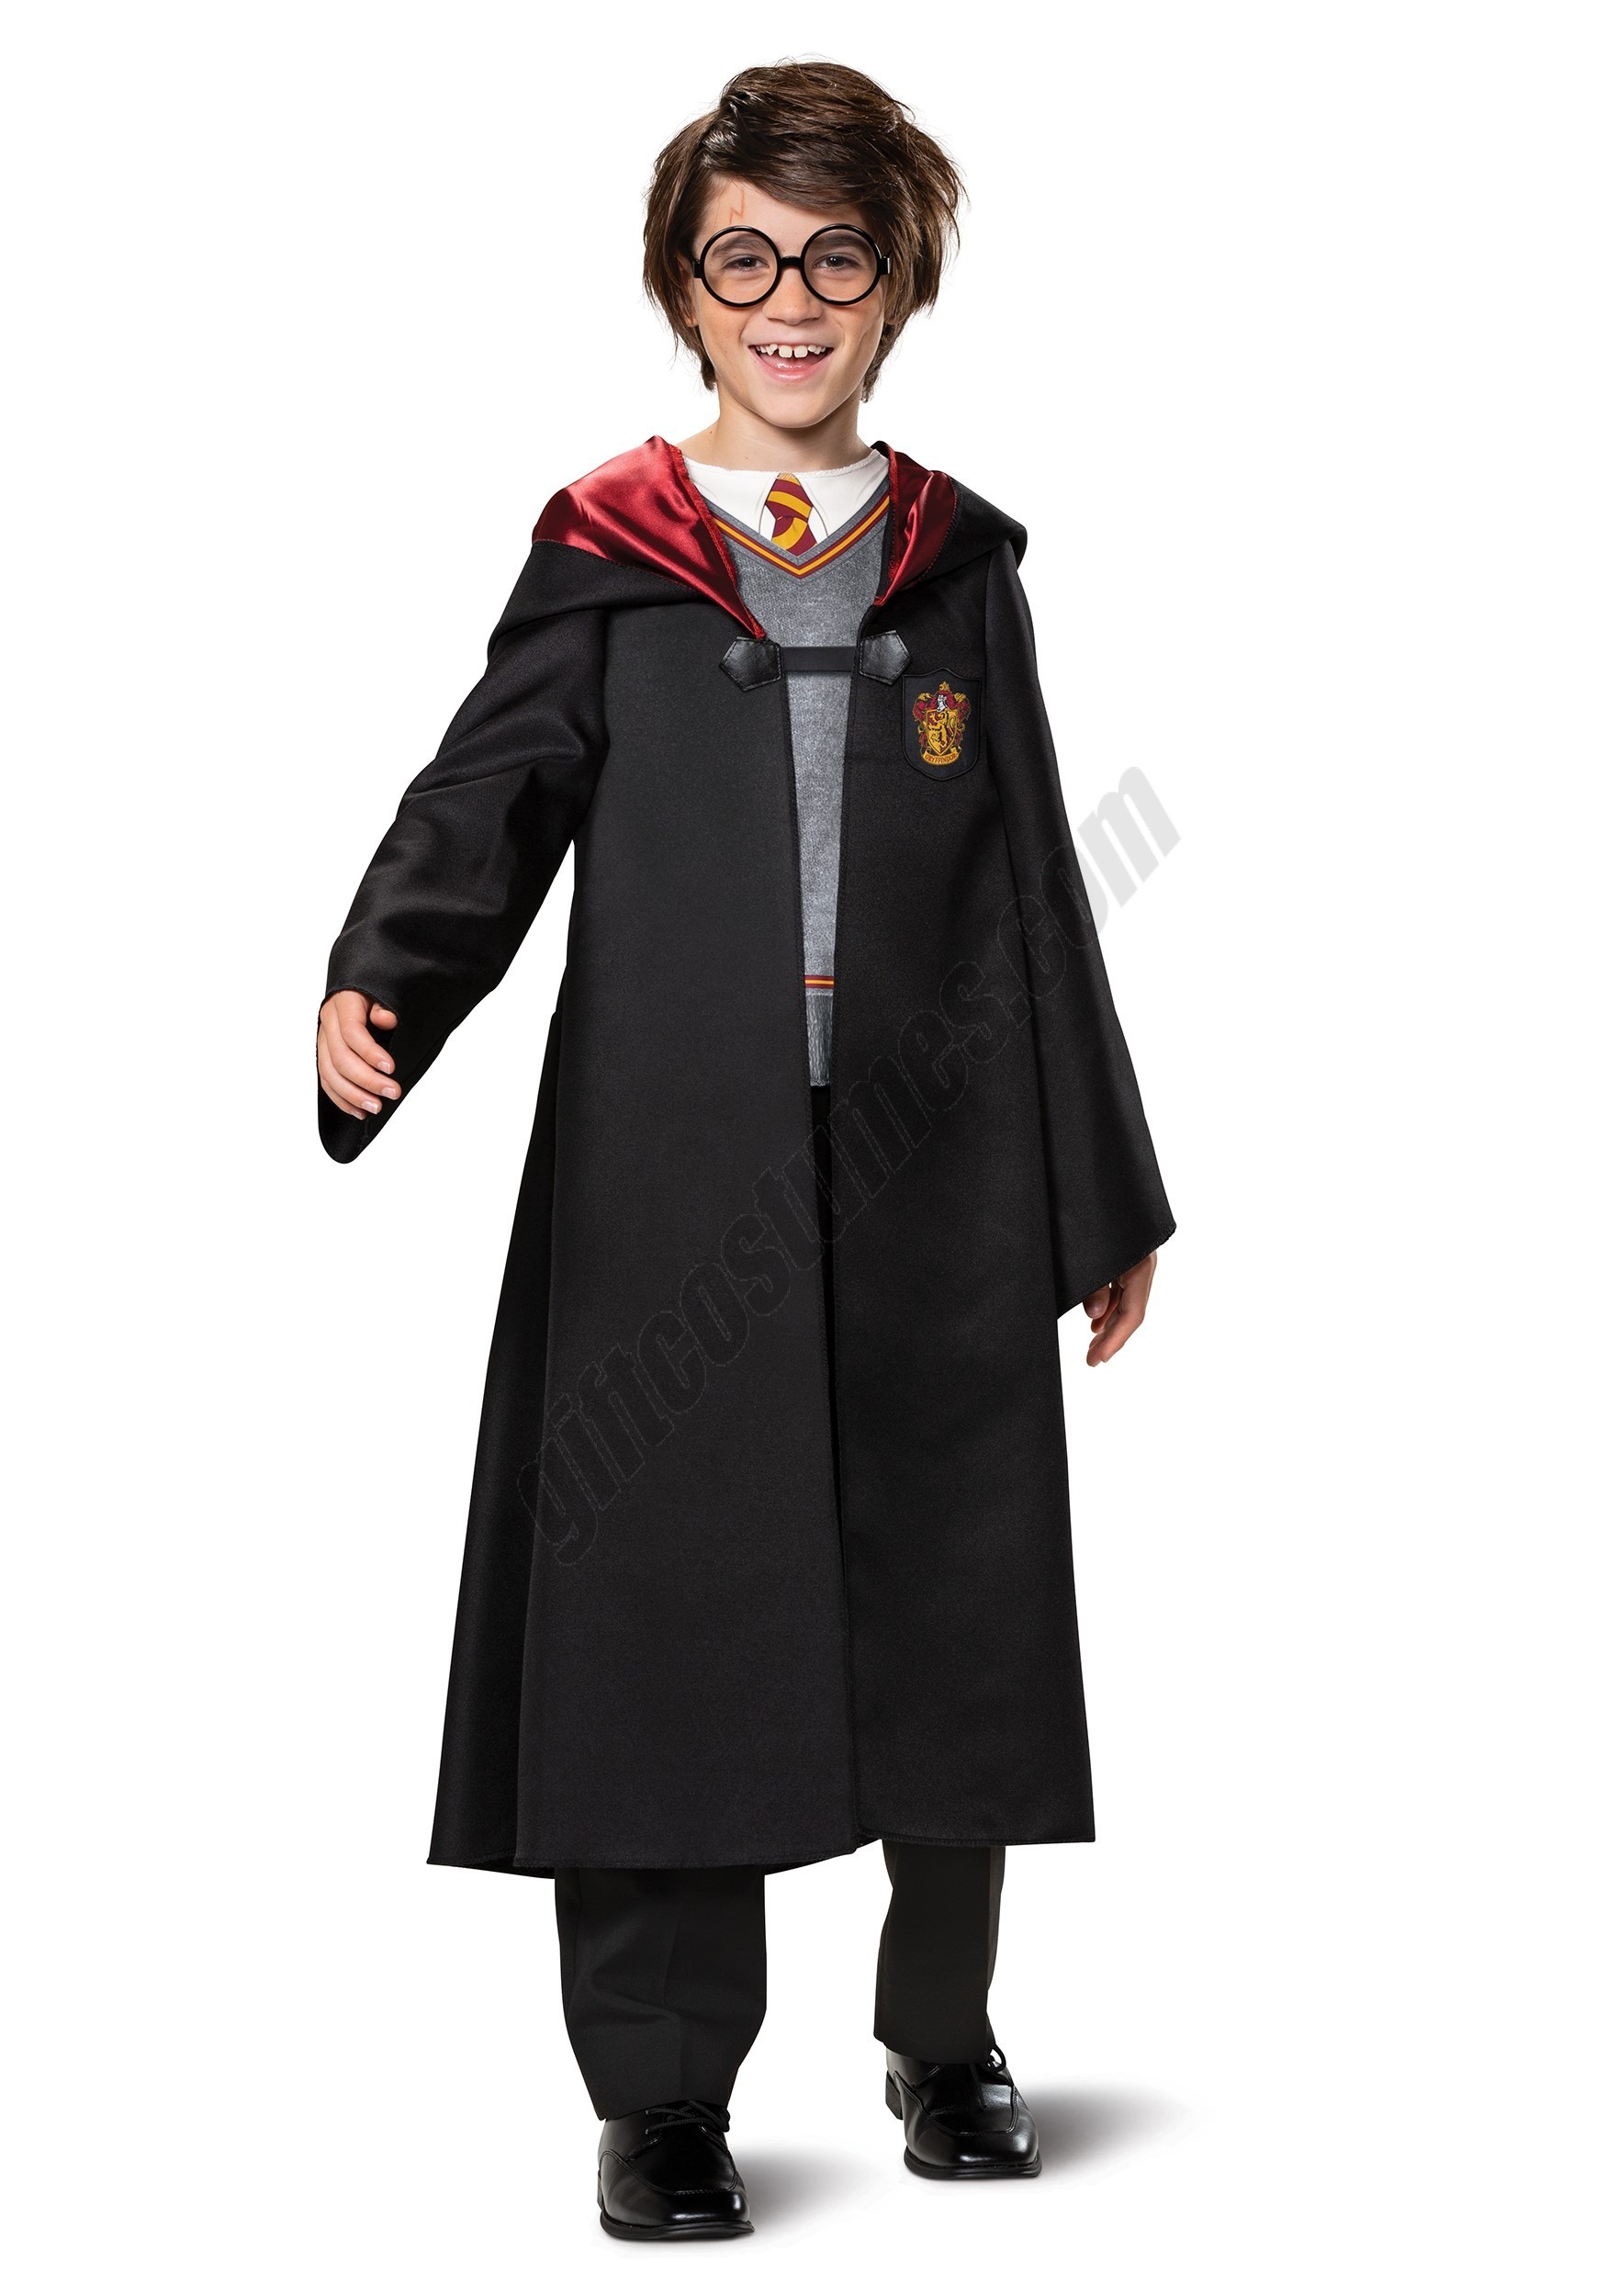 Boy's Harry Potter Classic Harry Costume Promotions - Boy's Harry Potter Classic Harry Costume Promotions